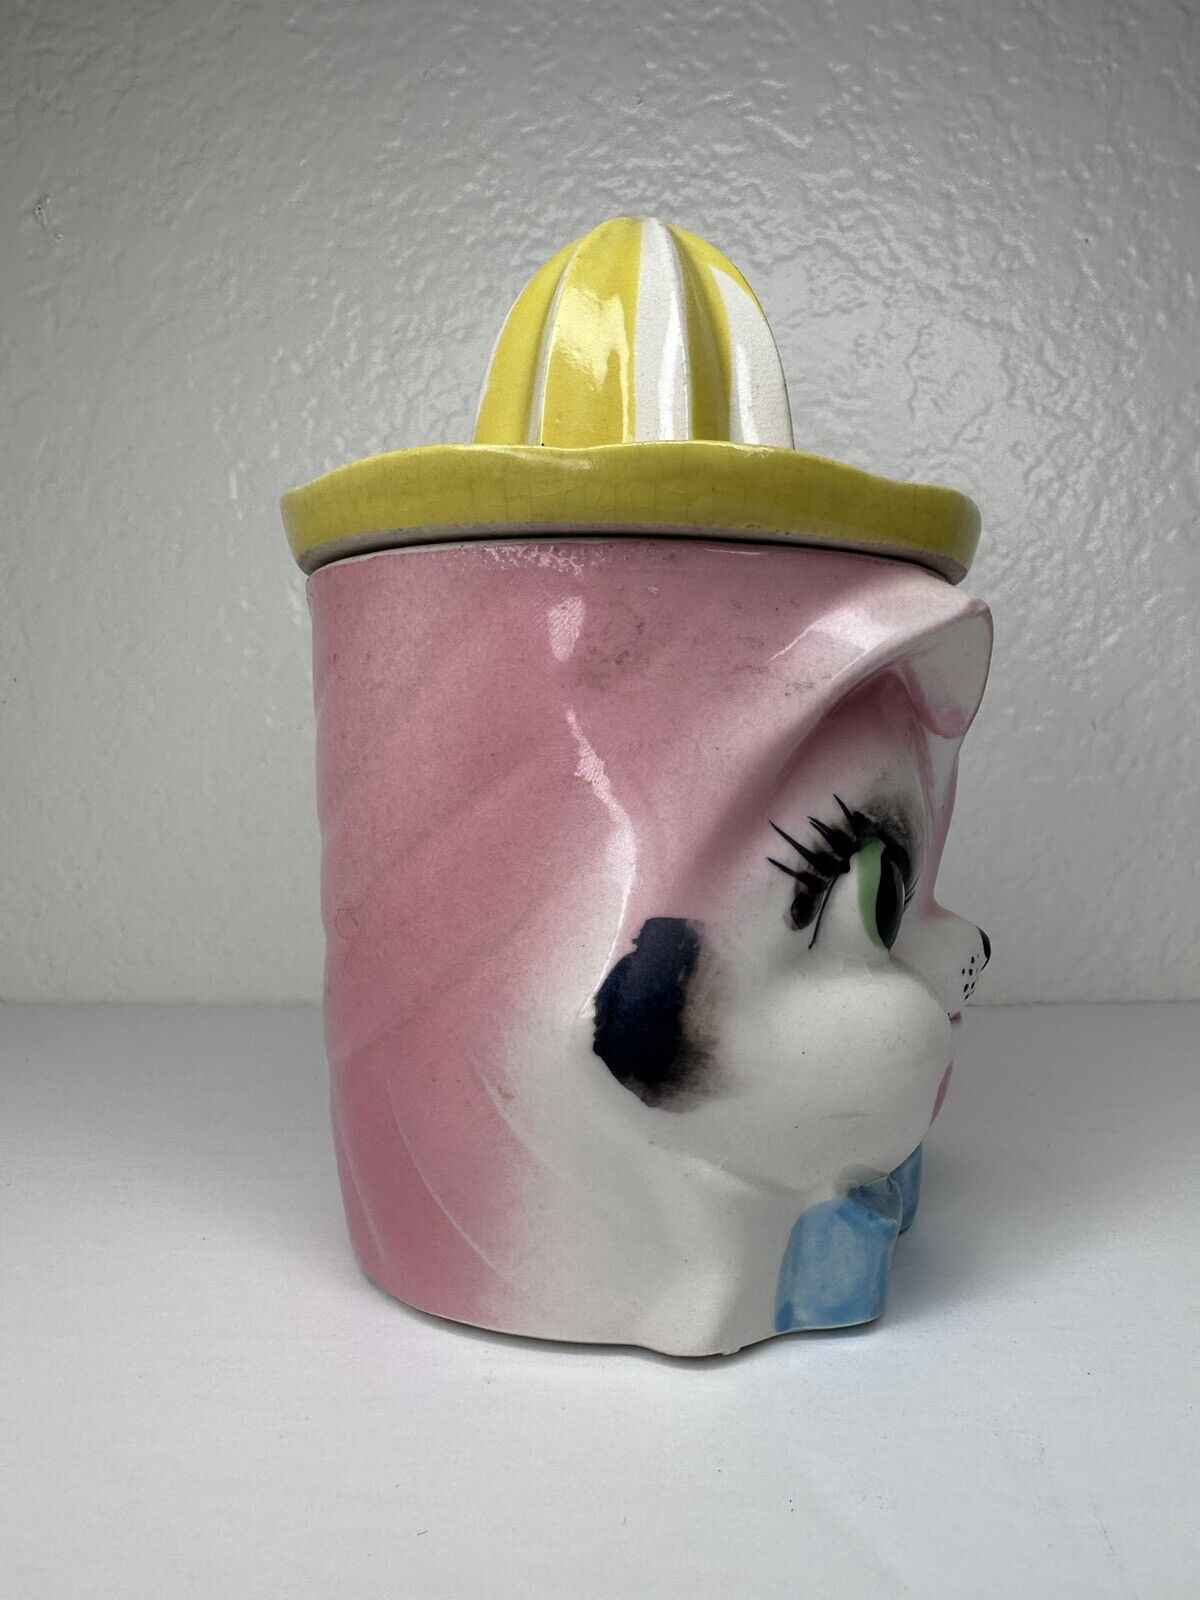 Pink Cat Face Citrus Juicer - 1950s Ceramic Juicer |  Mid-Century Modern Kitchenware,  Retro Pink Kitchen Essential,  Unique Cat Design,  Functional & Adorable Kitchen Gadget,  Easy-Clean Ceramic,  Made in the USA - TreasuTiques